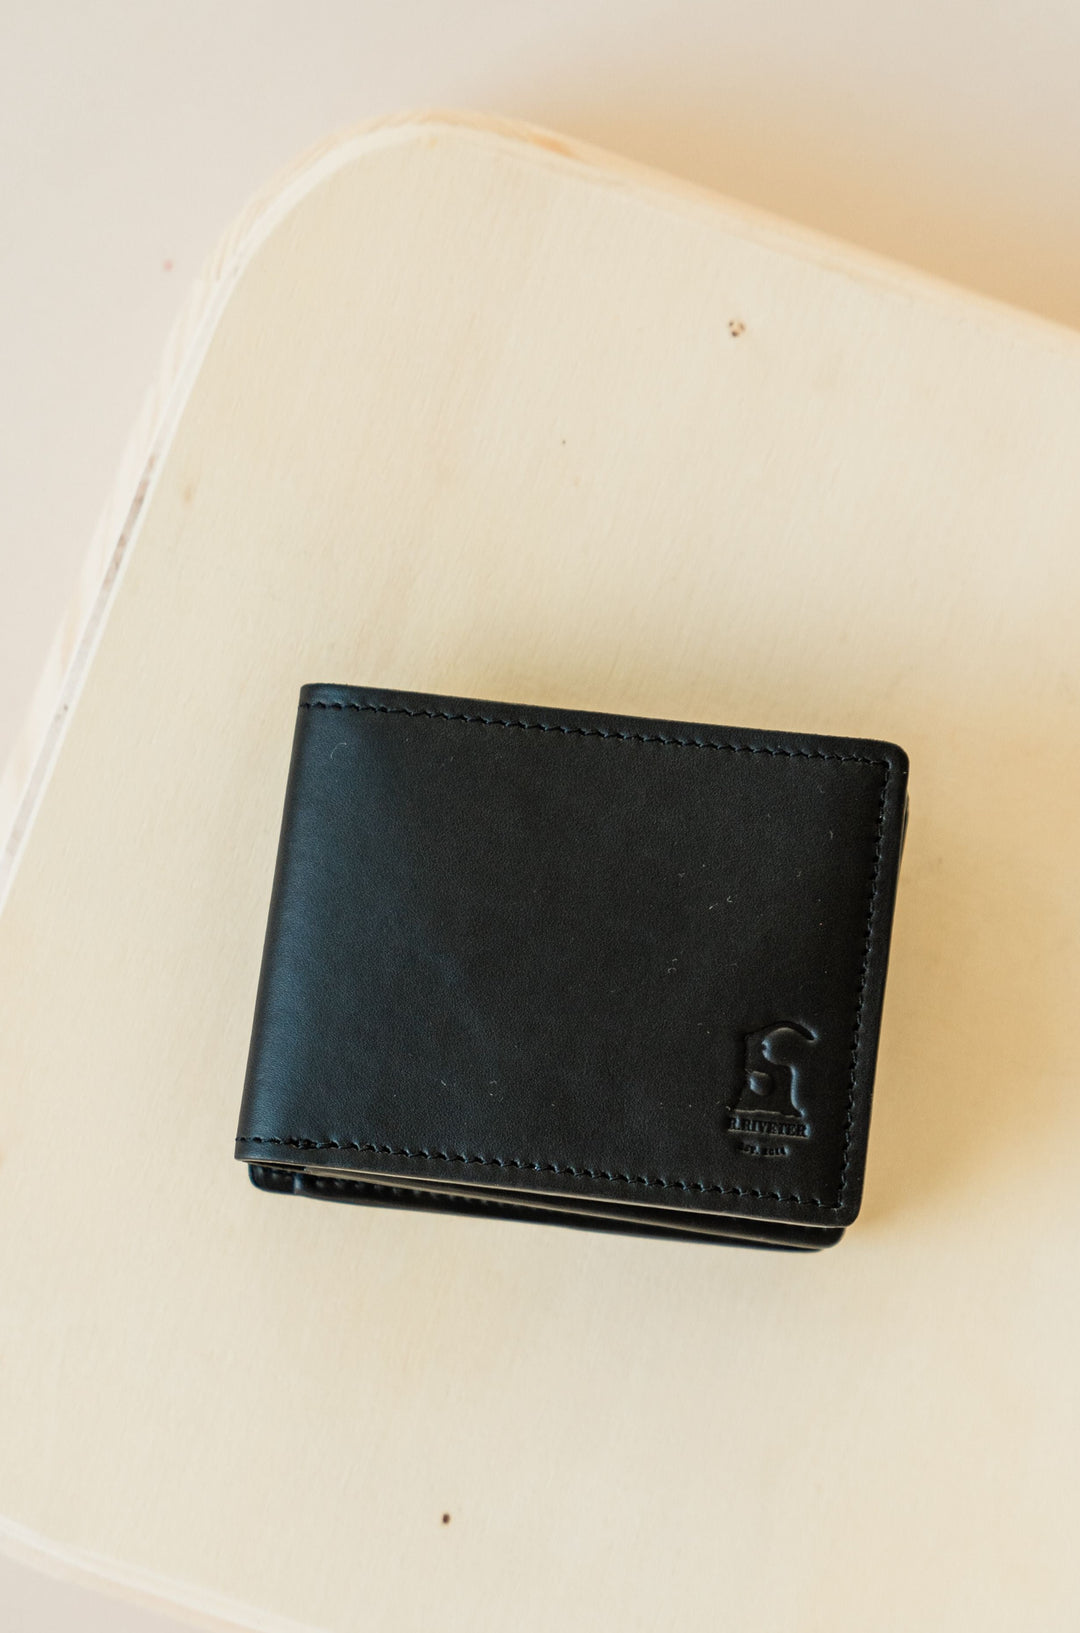 Original Penguin Men's Leather Wallet Card Case